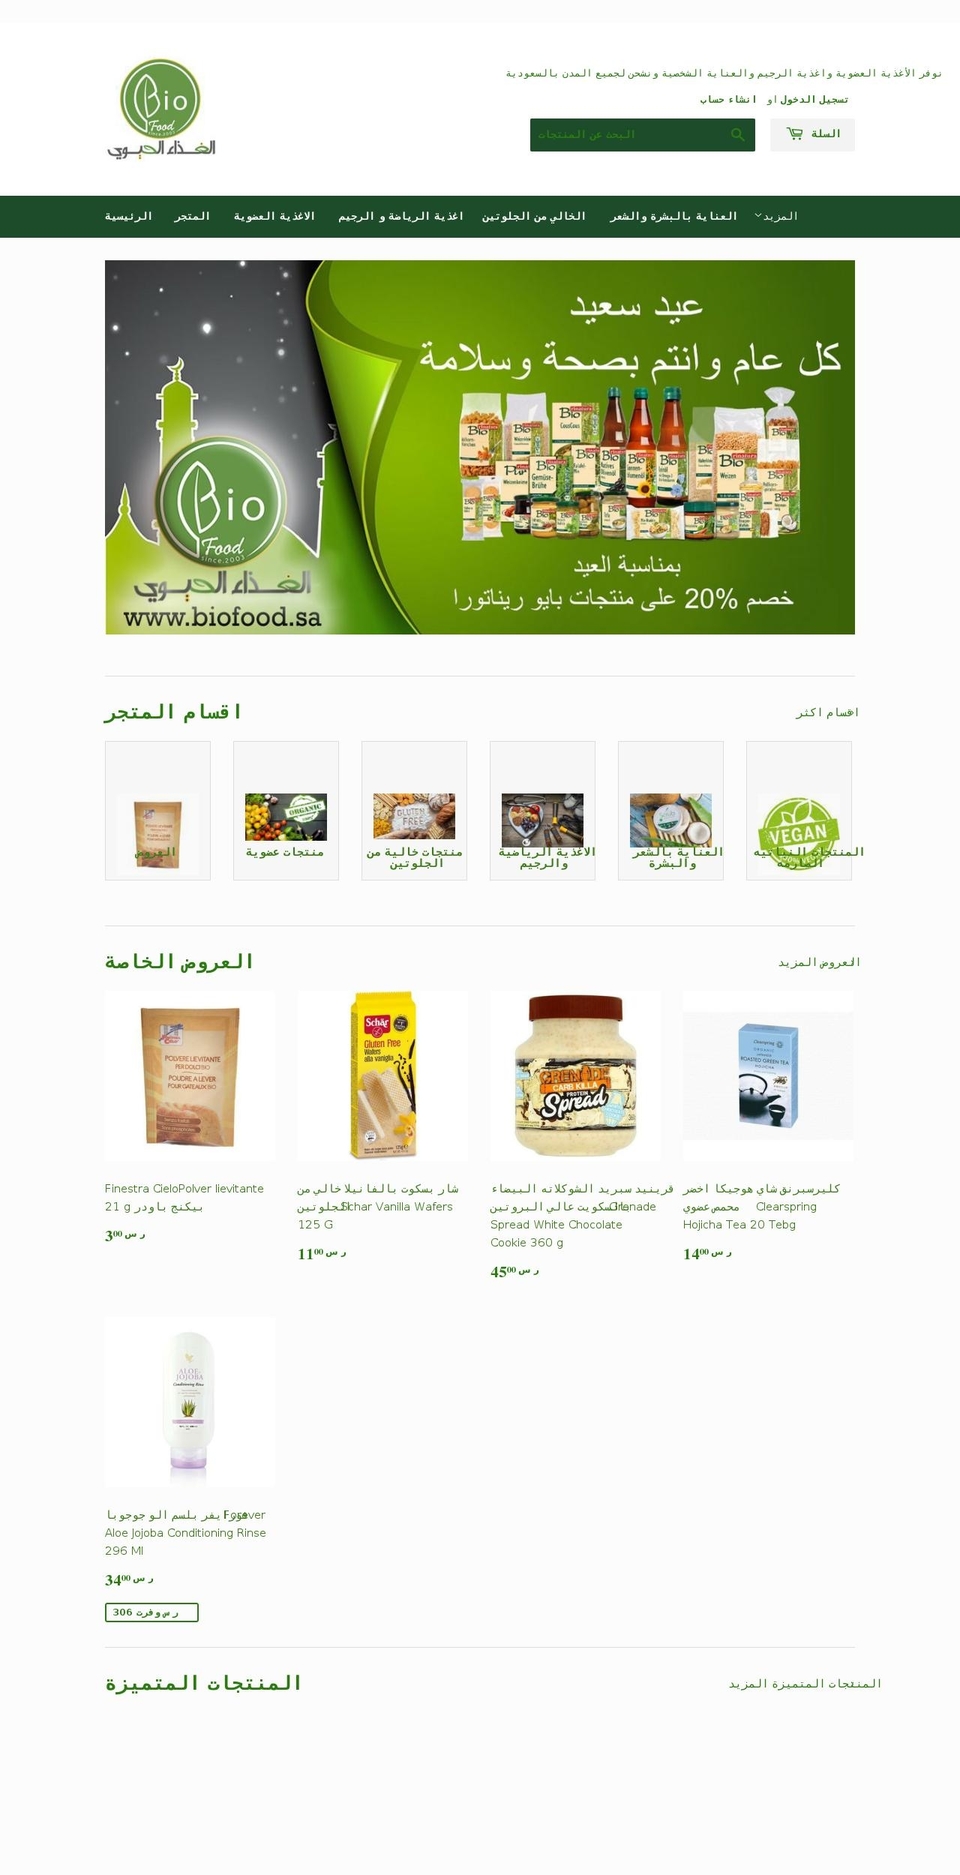 biofood.sa shopify website screenshot